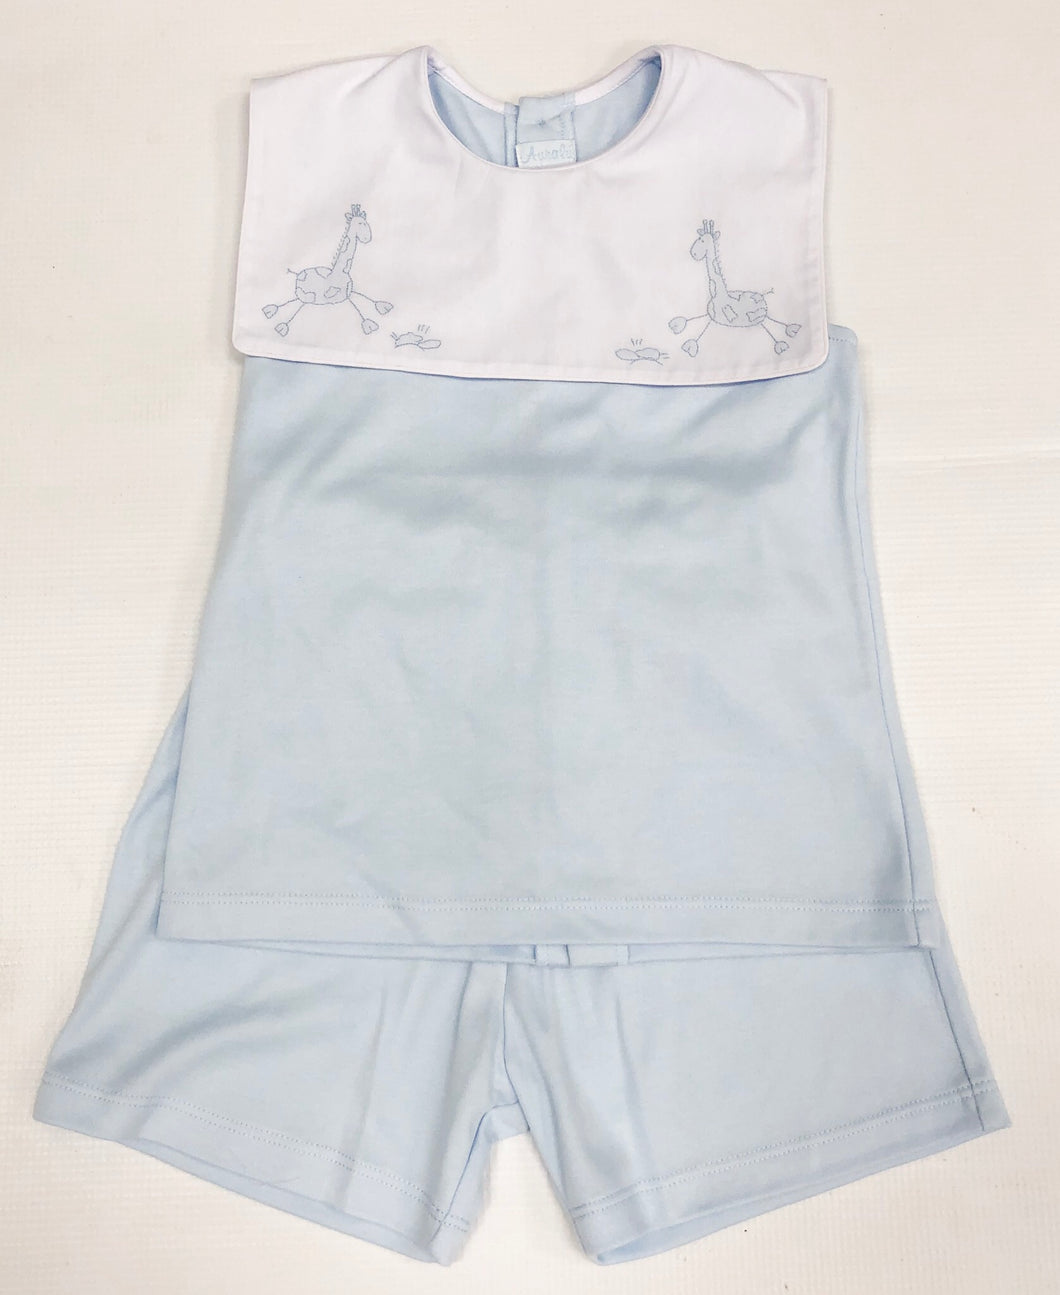 Blue Knit Short Set w/ Giraffe Embroidery